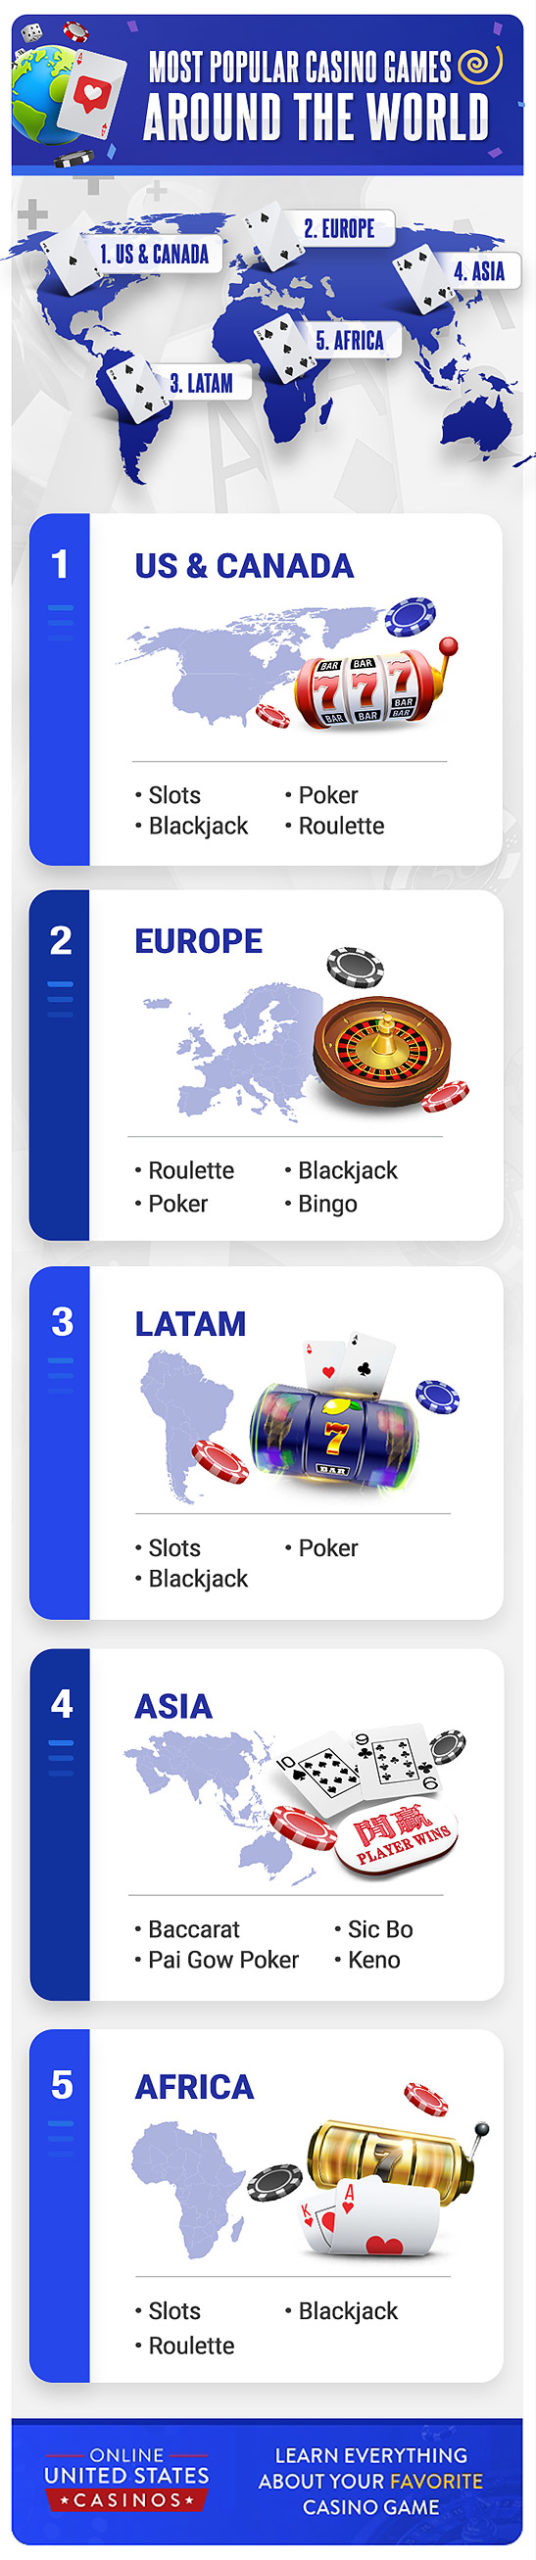 Casino Games Around the World Infographic (mobile) 